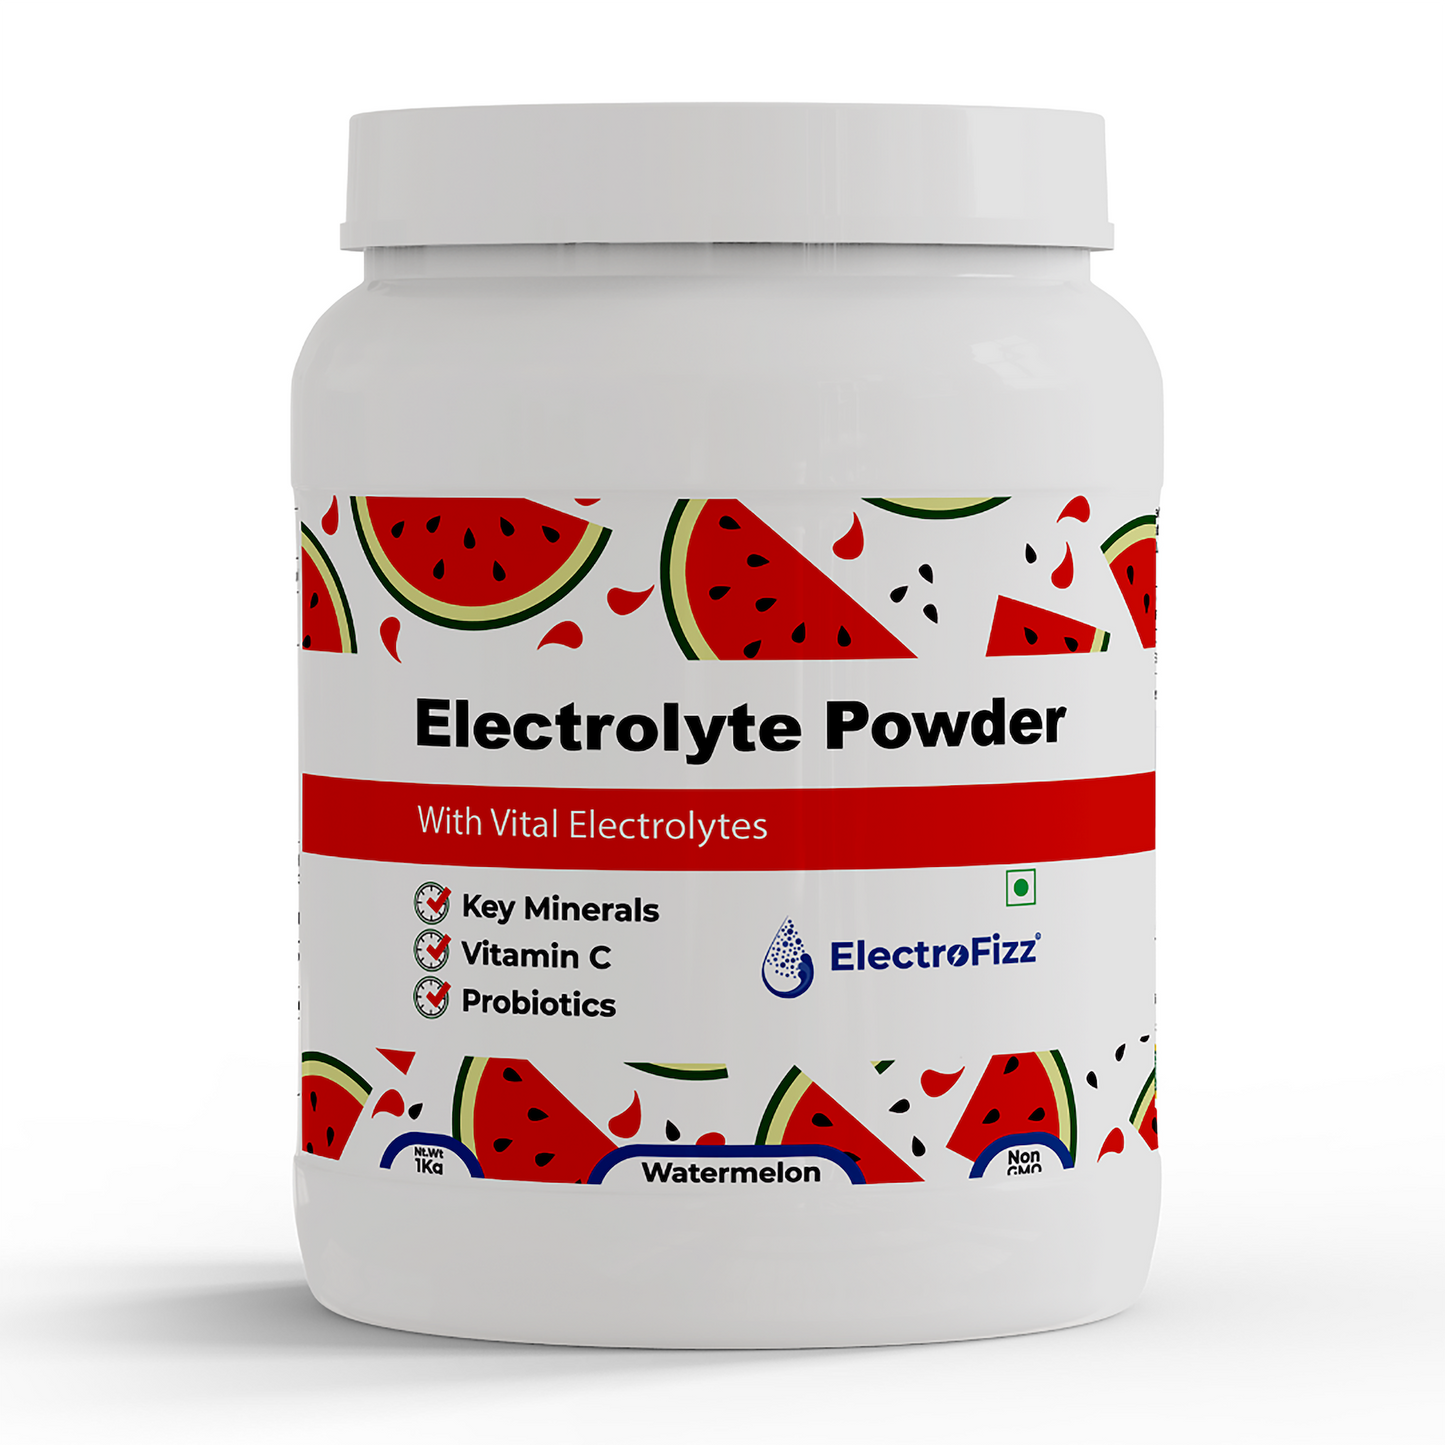 ElectroFizz Instant Hydration Energy Drink Powder for Workout for Men and Women- Electrolytes, Vitamin C, Probiotics - 1 Kg Jar Pack